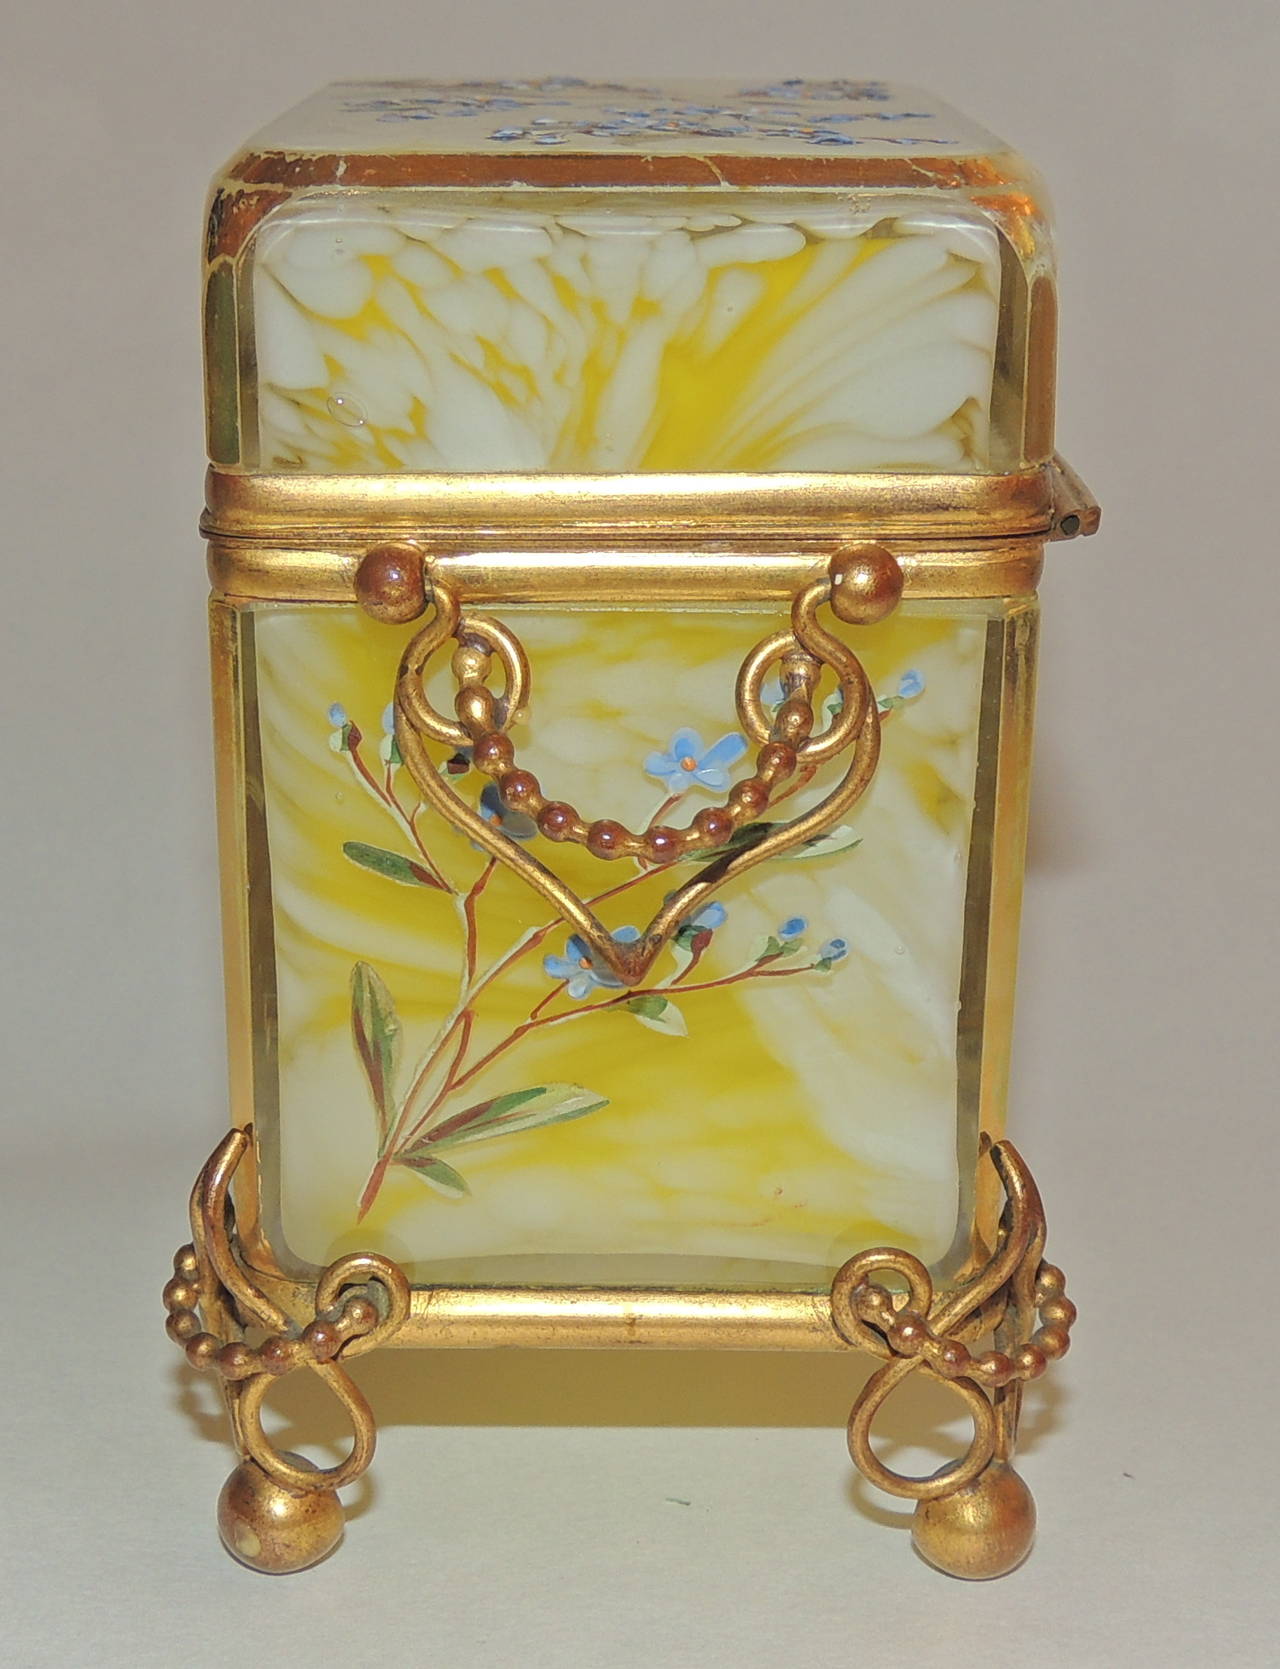 19th Century Rare Bohemian Marbleized Glass Hand-Painted Enameled Ormulo Casket Box